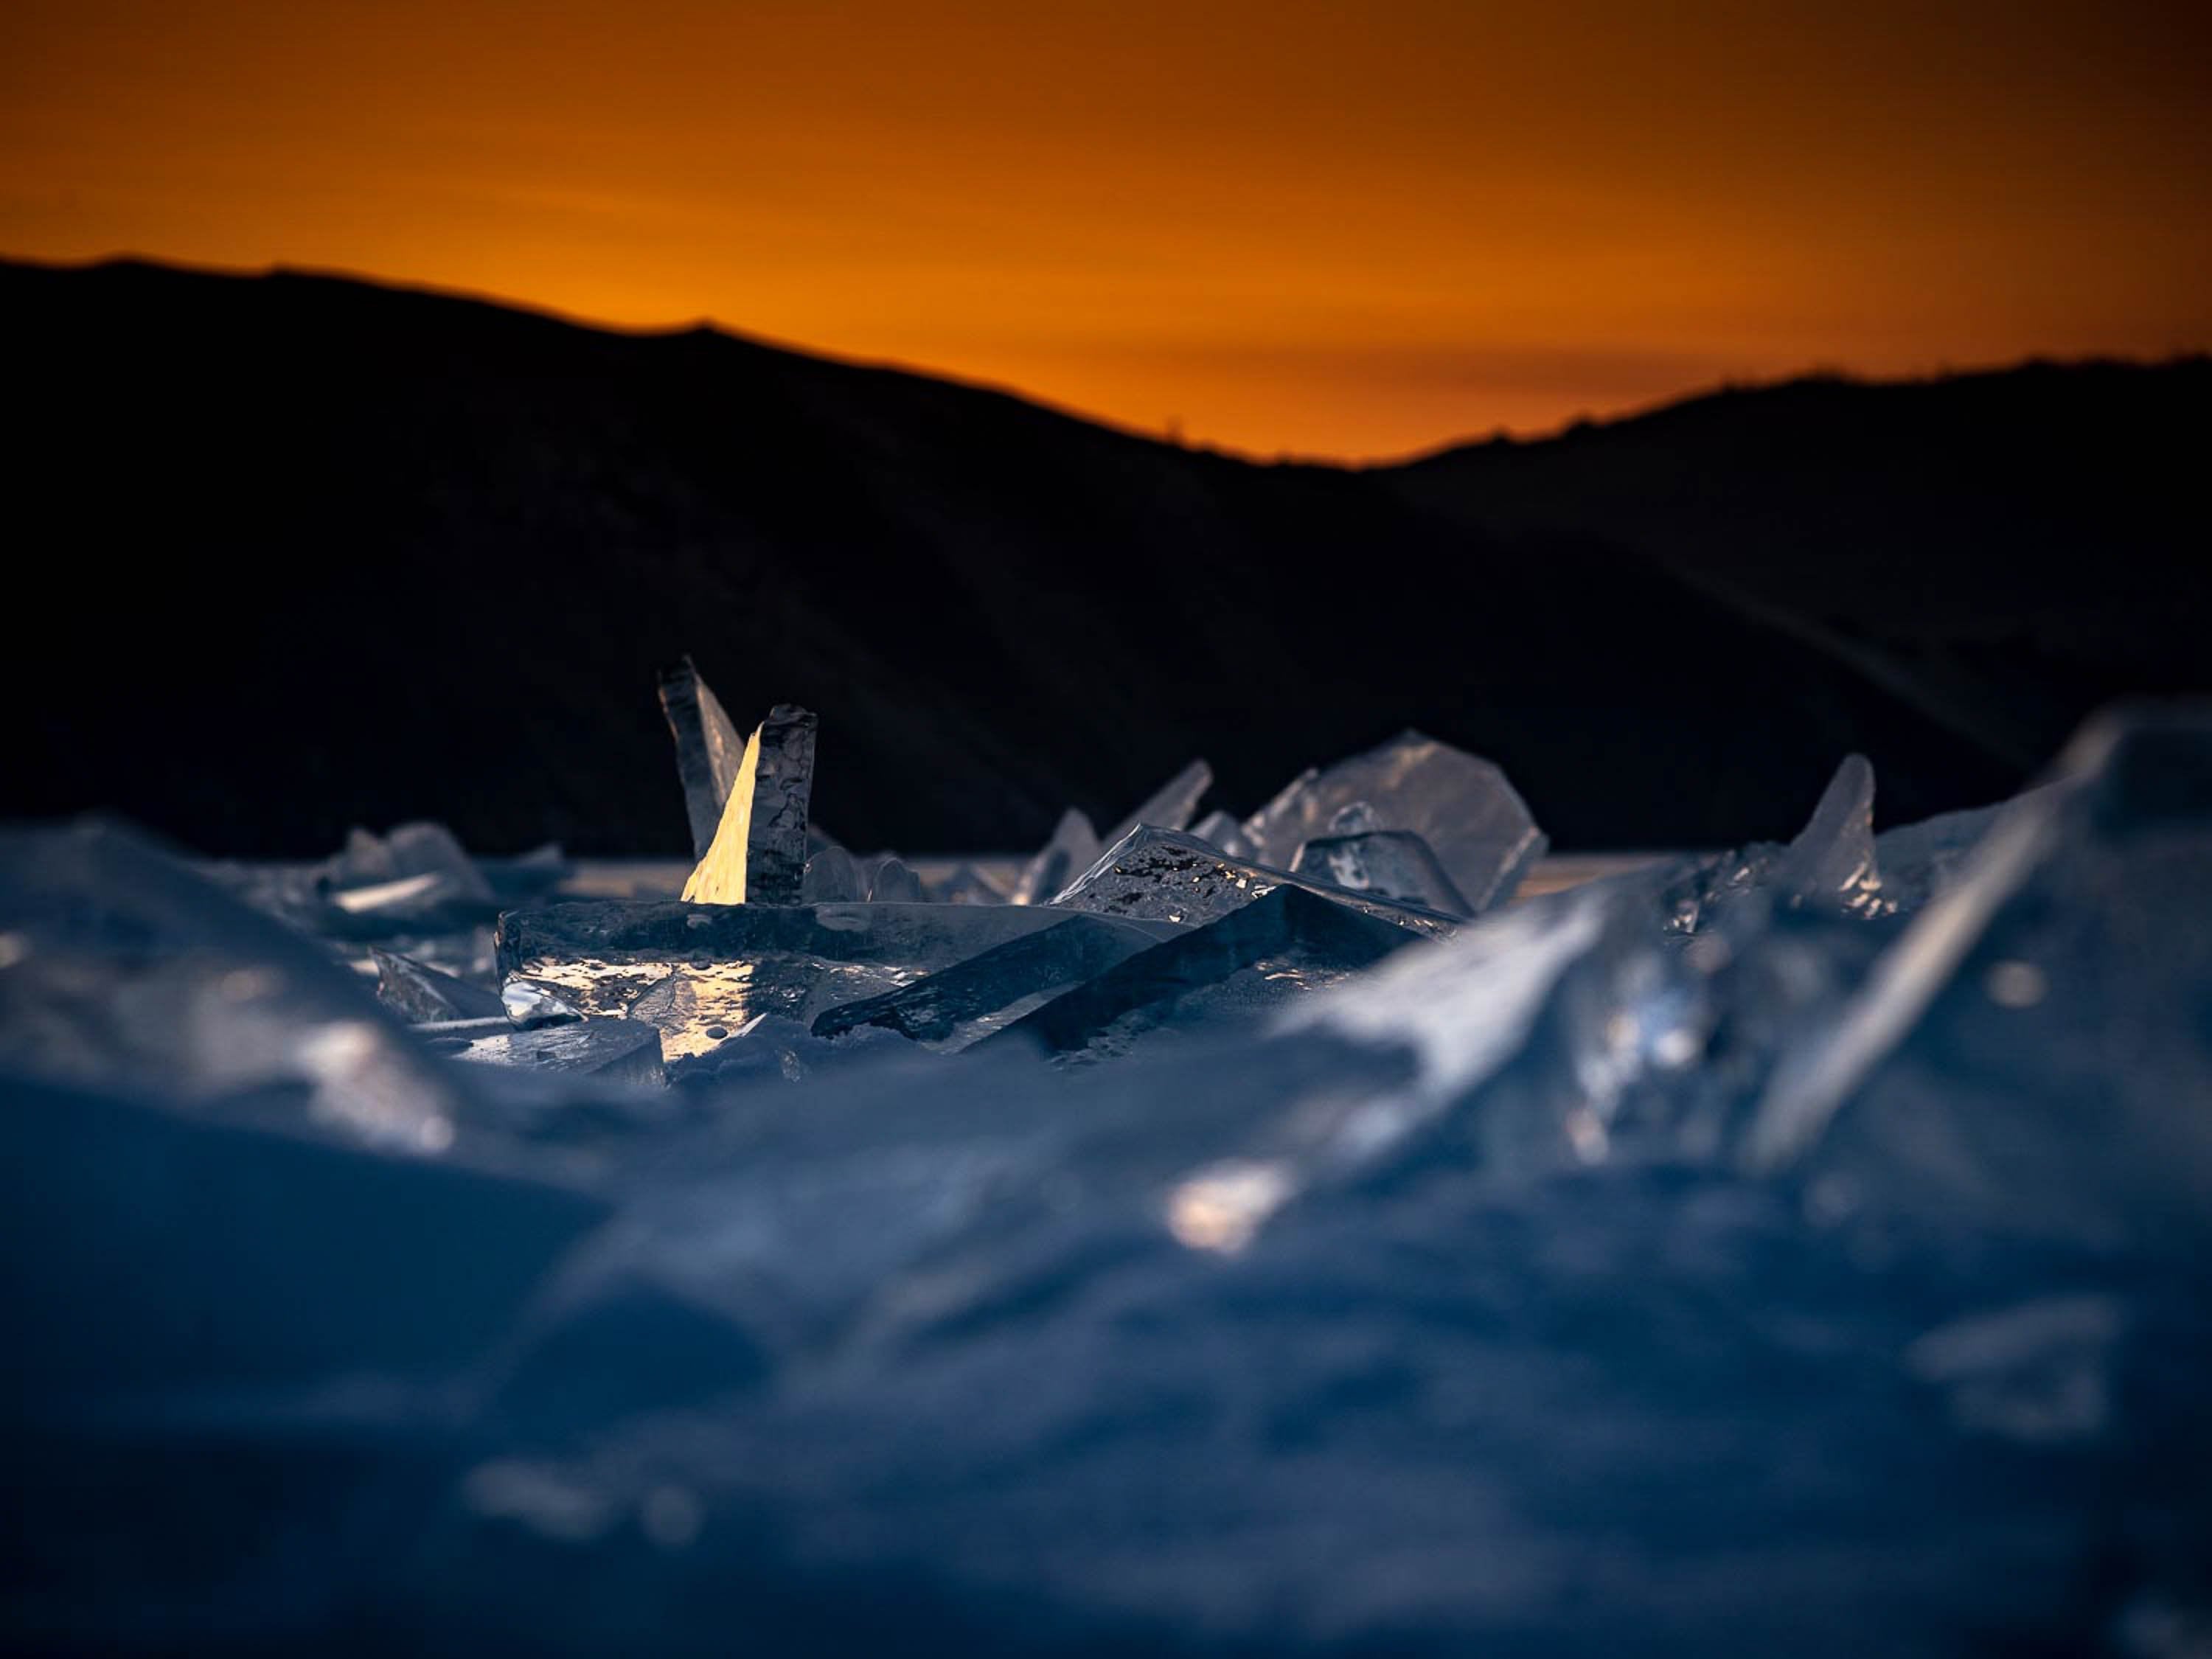 A dark close-up shot of crystalline ice pieces, Lake Baikal #50, Siberia, Russia